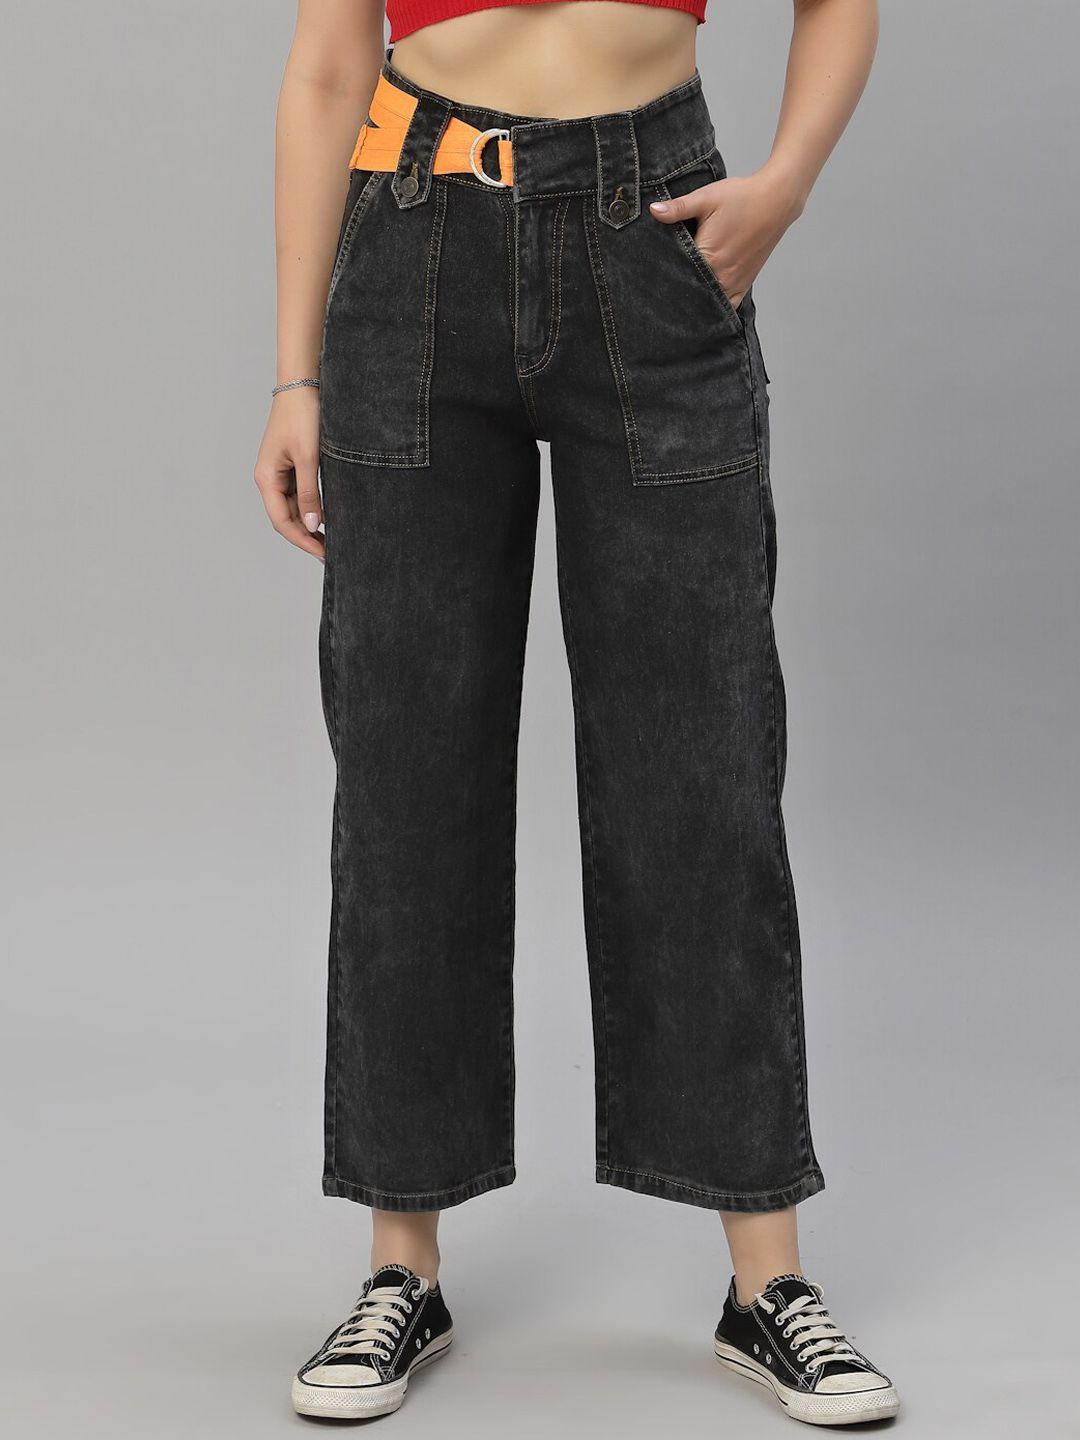 kassually women charcoal wide leg high-rise jeans